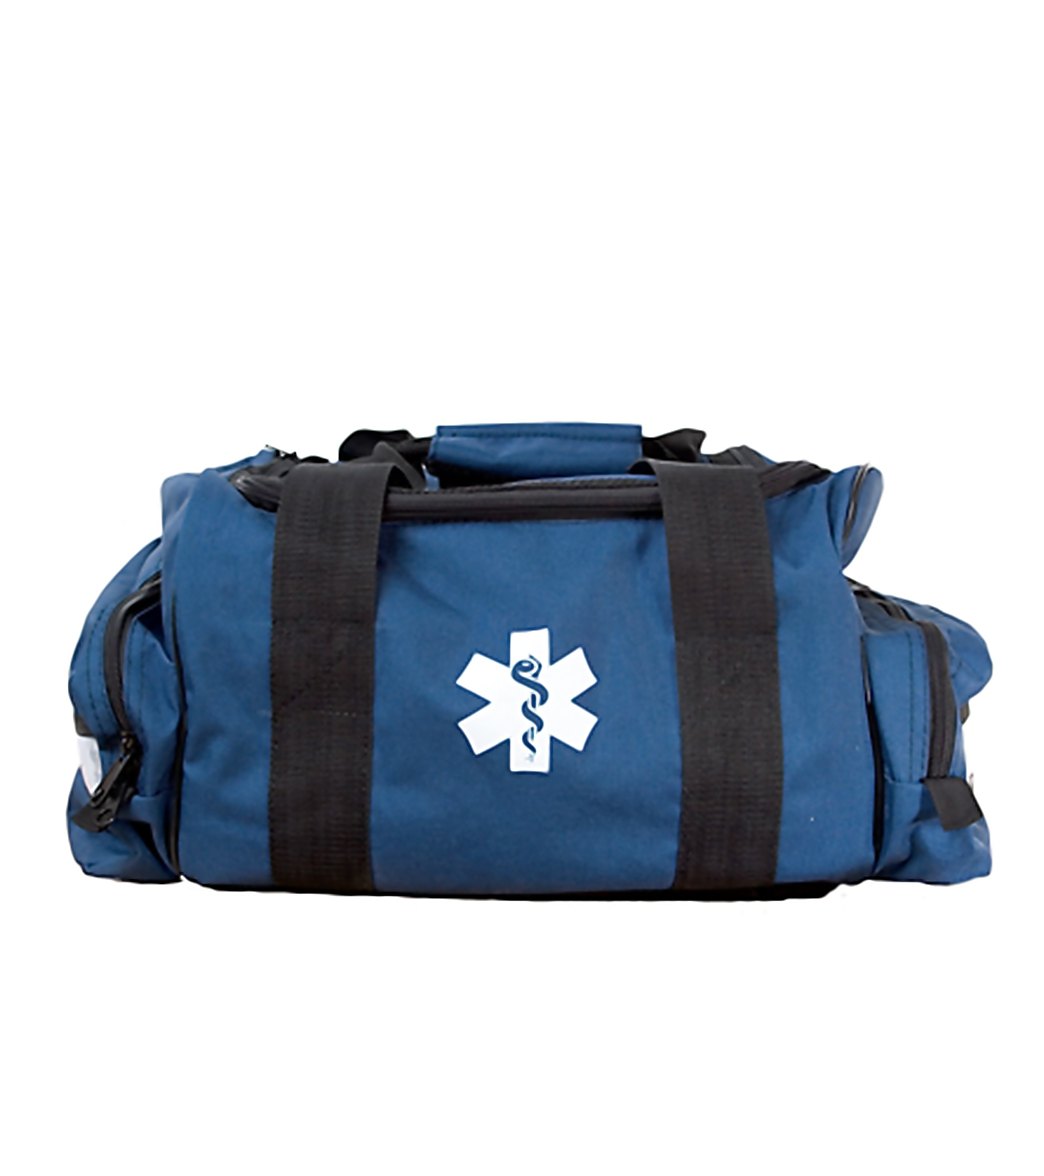 Kemp Large Trauma Bag - Navy Polyester - Swimoutlet.com